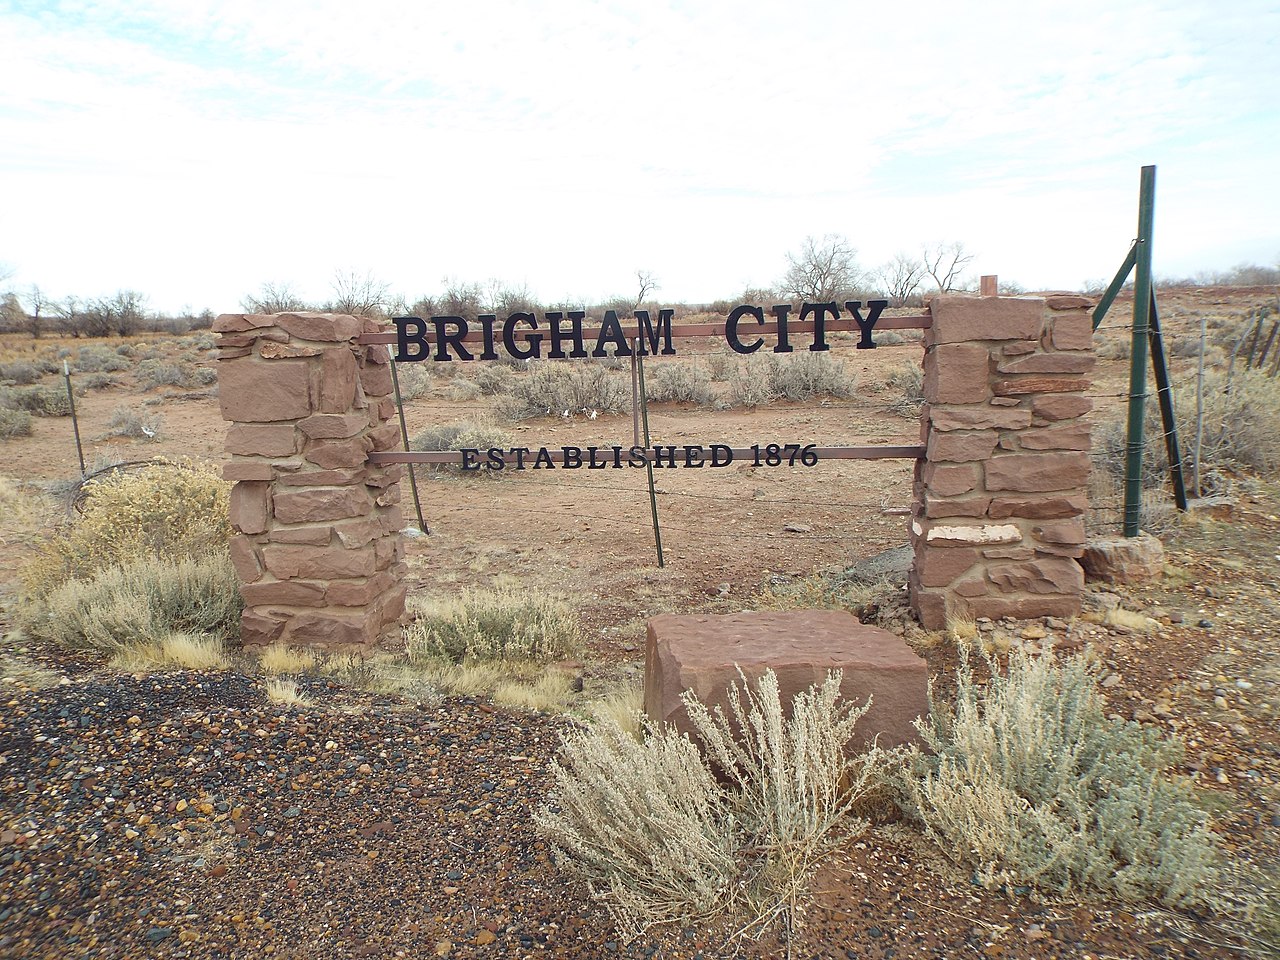 Brigham City, Arizona